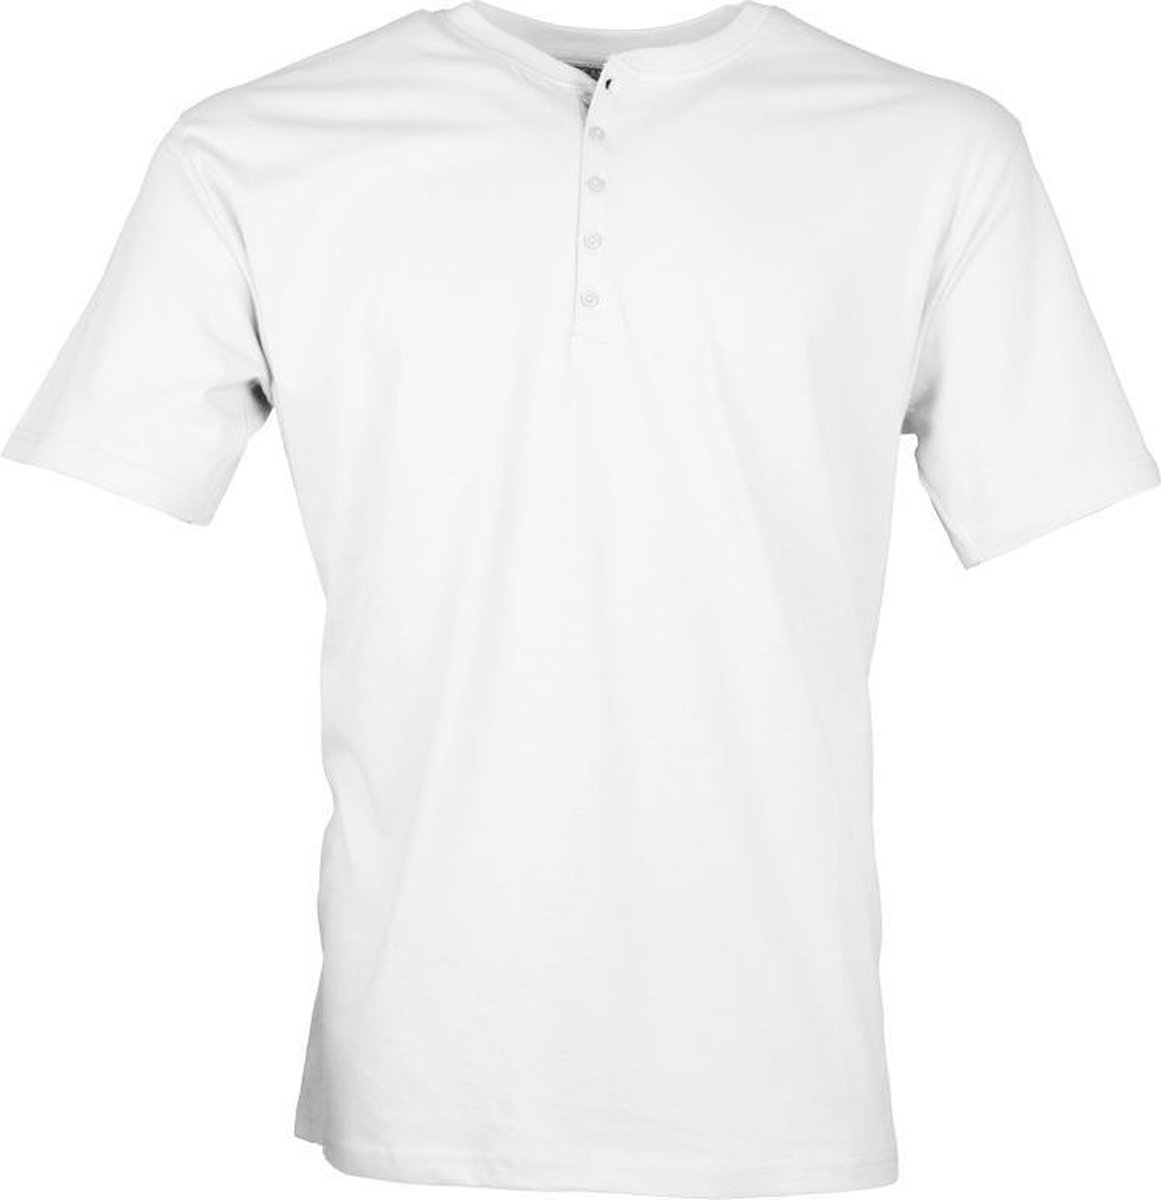 Losan Basic - Heren T-Shirt - Korte Mouw - Ronde Hals - Knoopjes - Wit - Maat XL